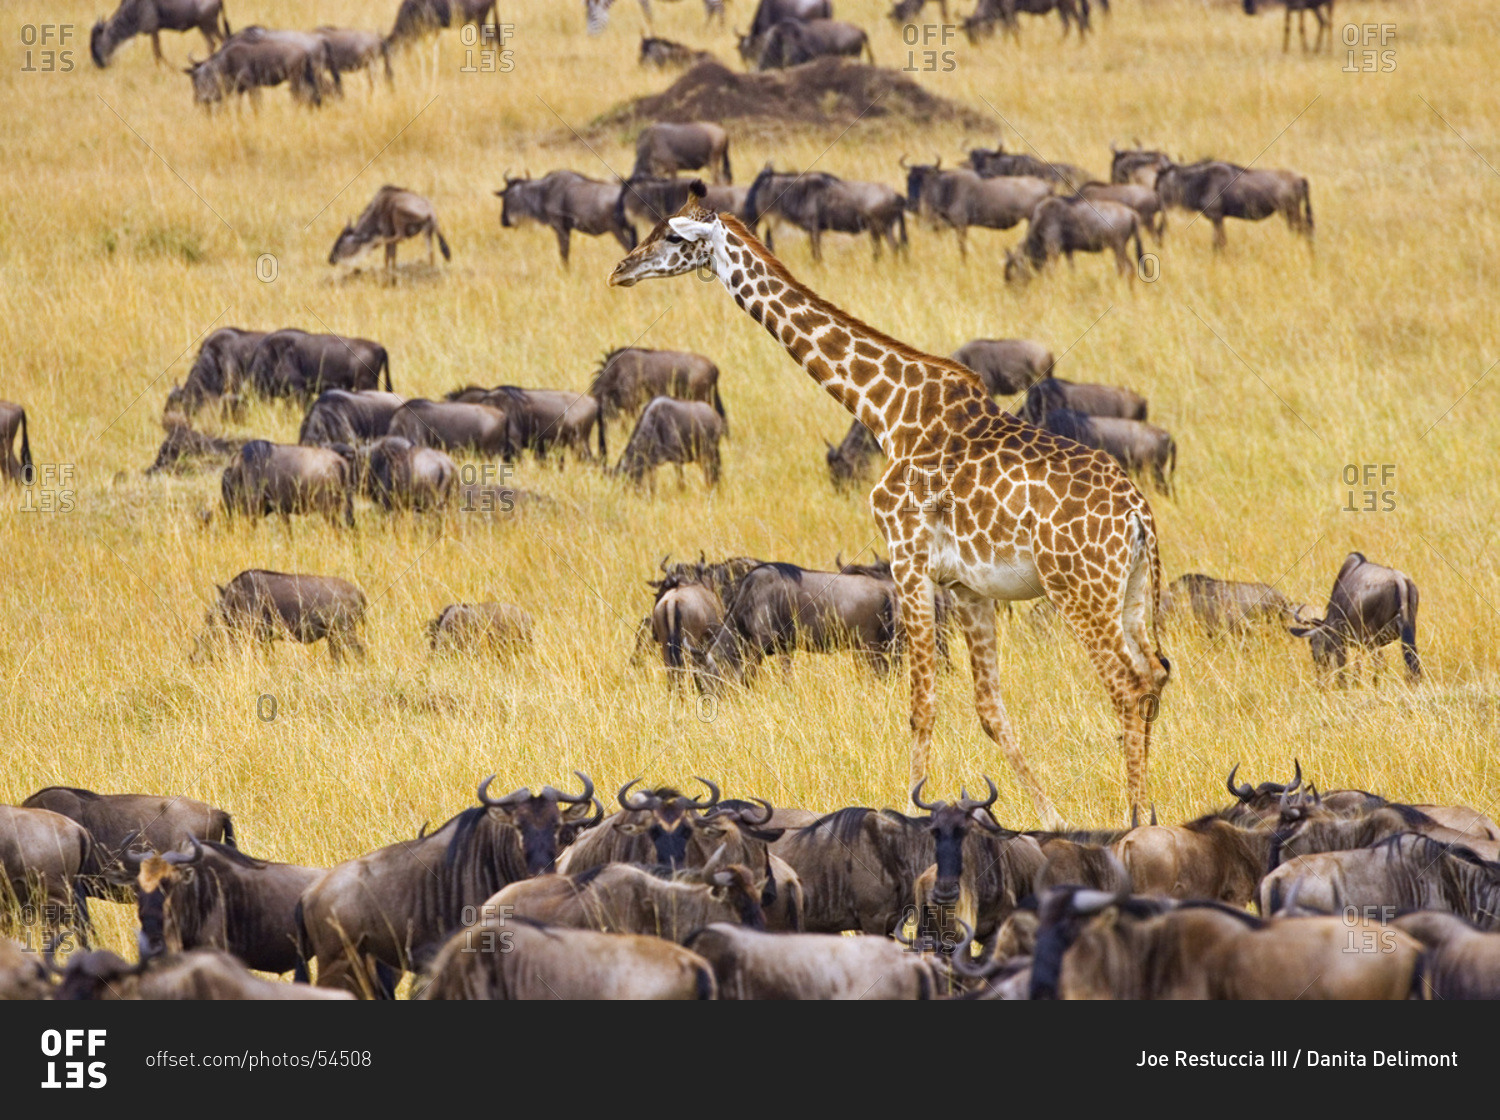 Crossing of the Mara River by Giraffes and wildebeest, Connochaetes taurinus,  migrating in the Maasai Mara Kenya